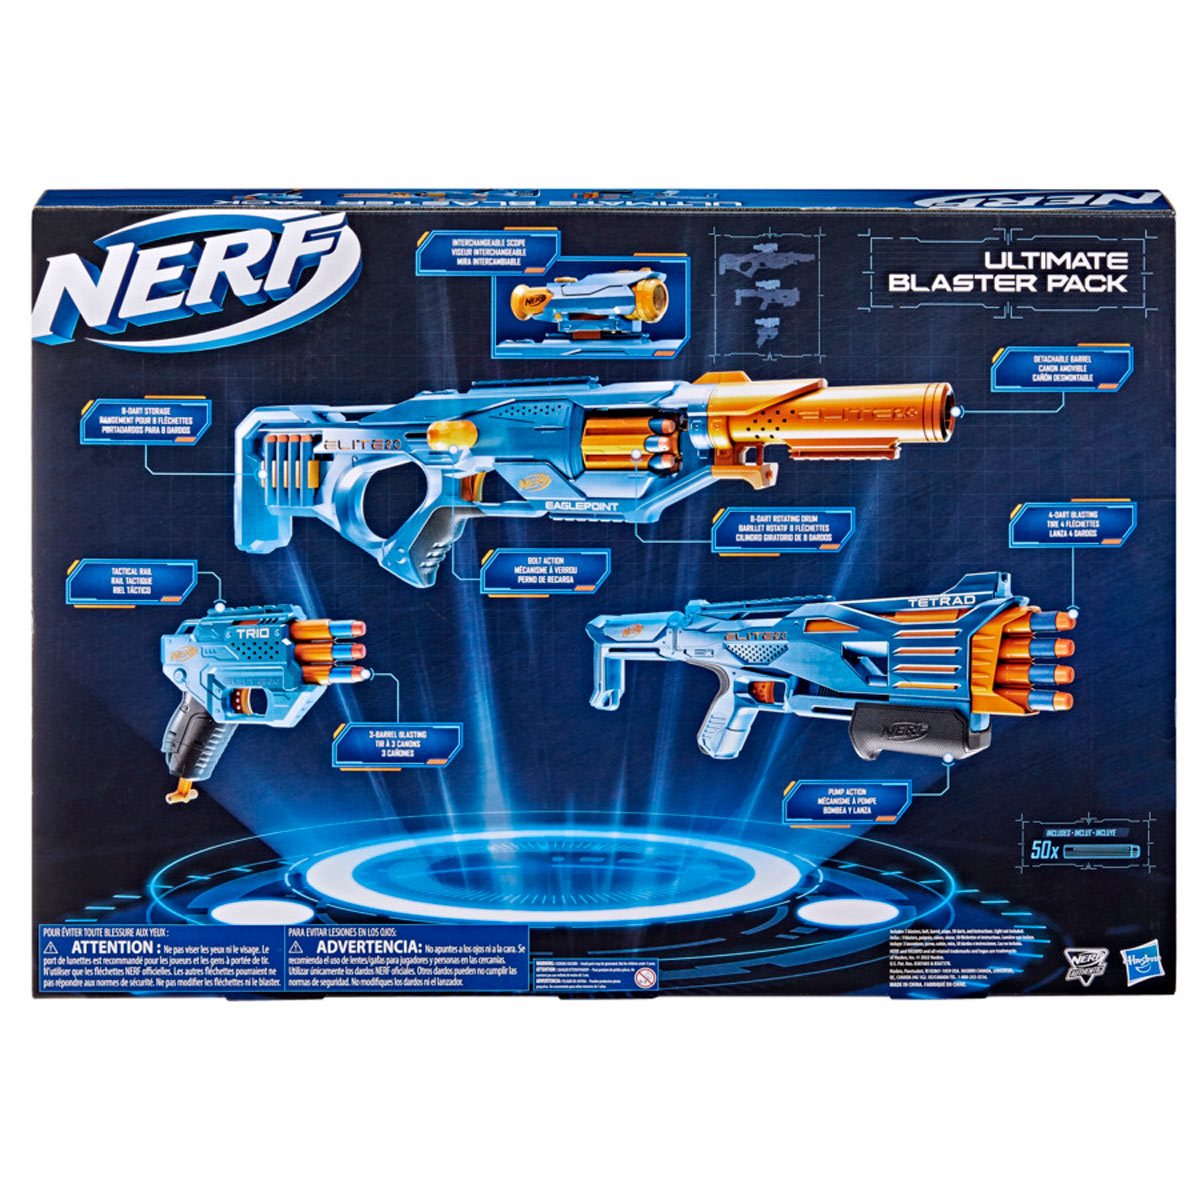 Nerf Elite 2.0 Trio Td-3 Blaster, 6 Nerf Elite Darts, 3-Barrel Blasting,  Tactical Rail